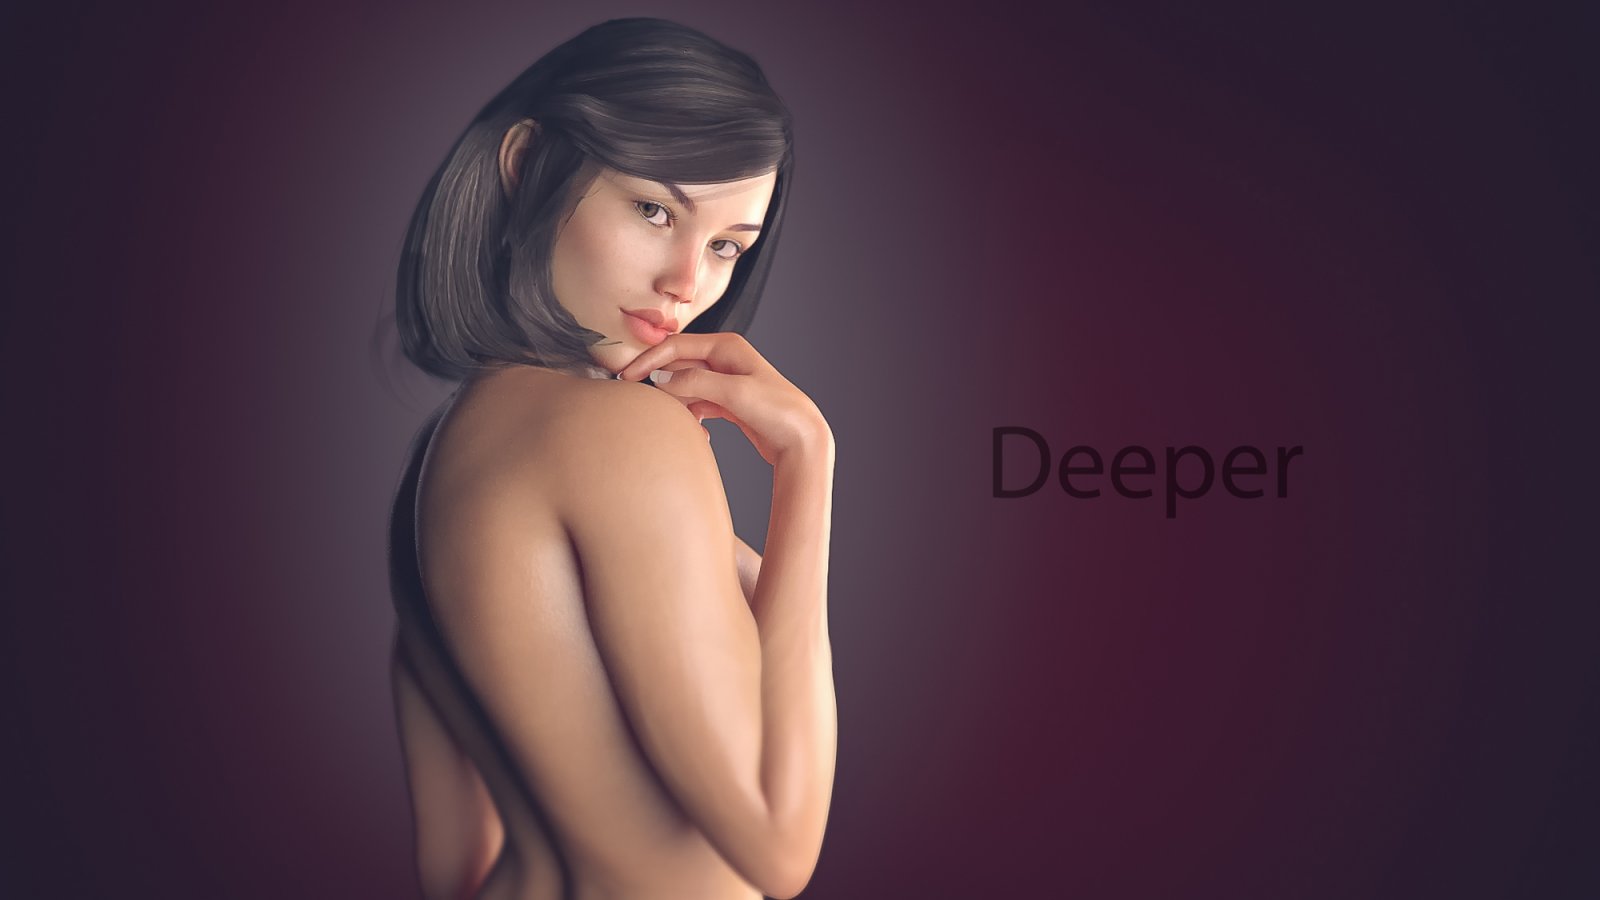 Deeper [ Version 0.0.1 ] [ Thundorn Games ]